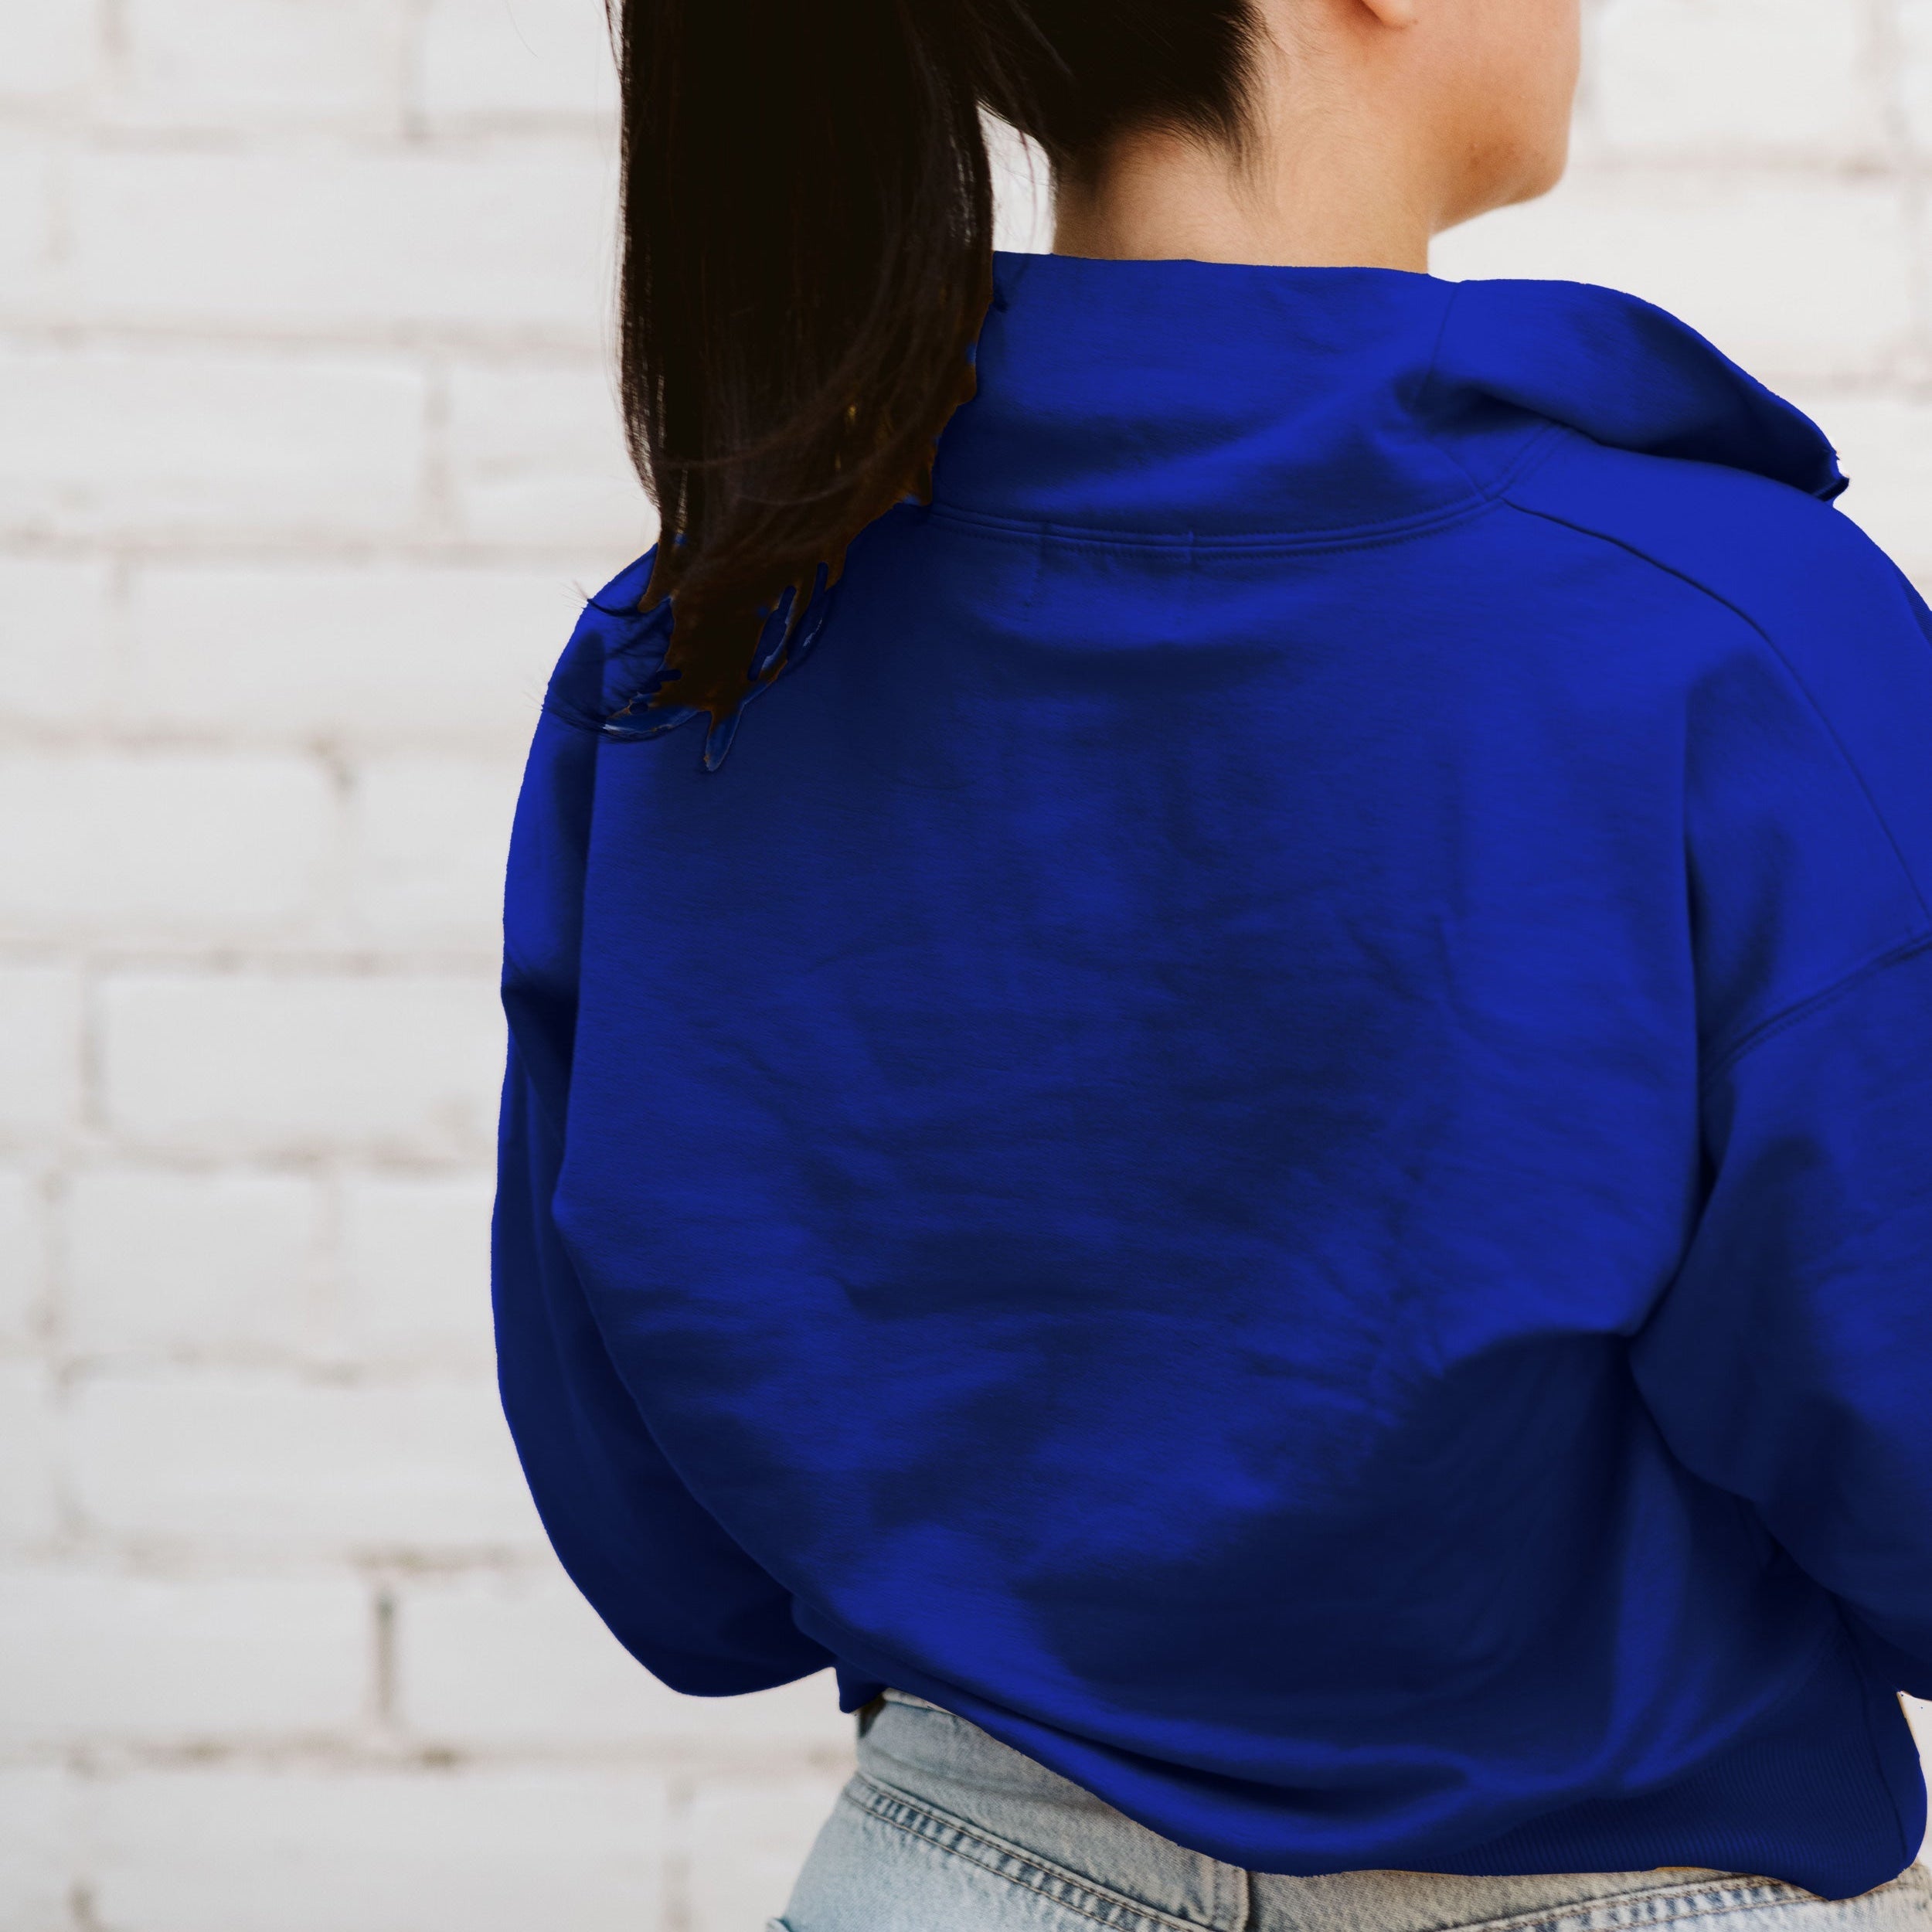 The 1/4 Zip Sweatshirt in Azure | FRANC Sustainable Clothing